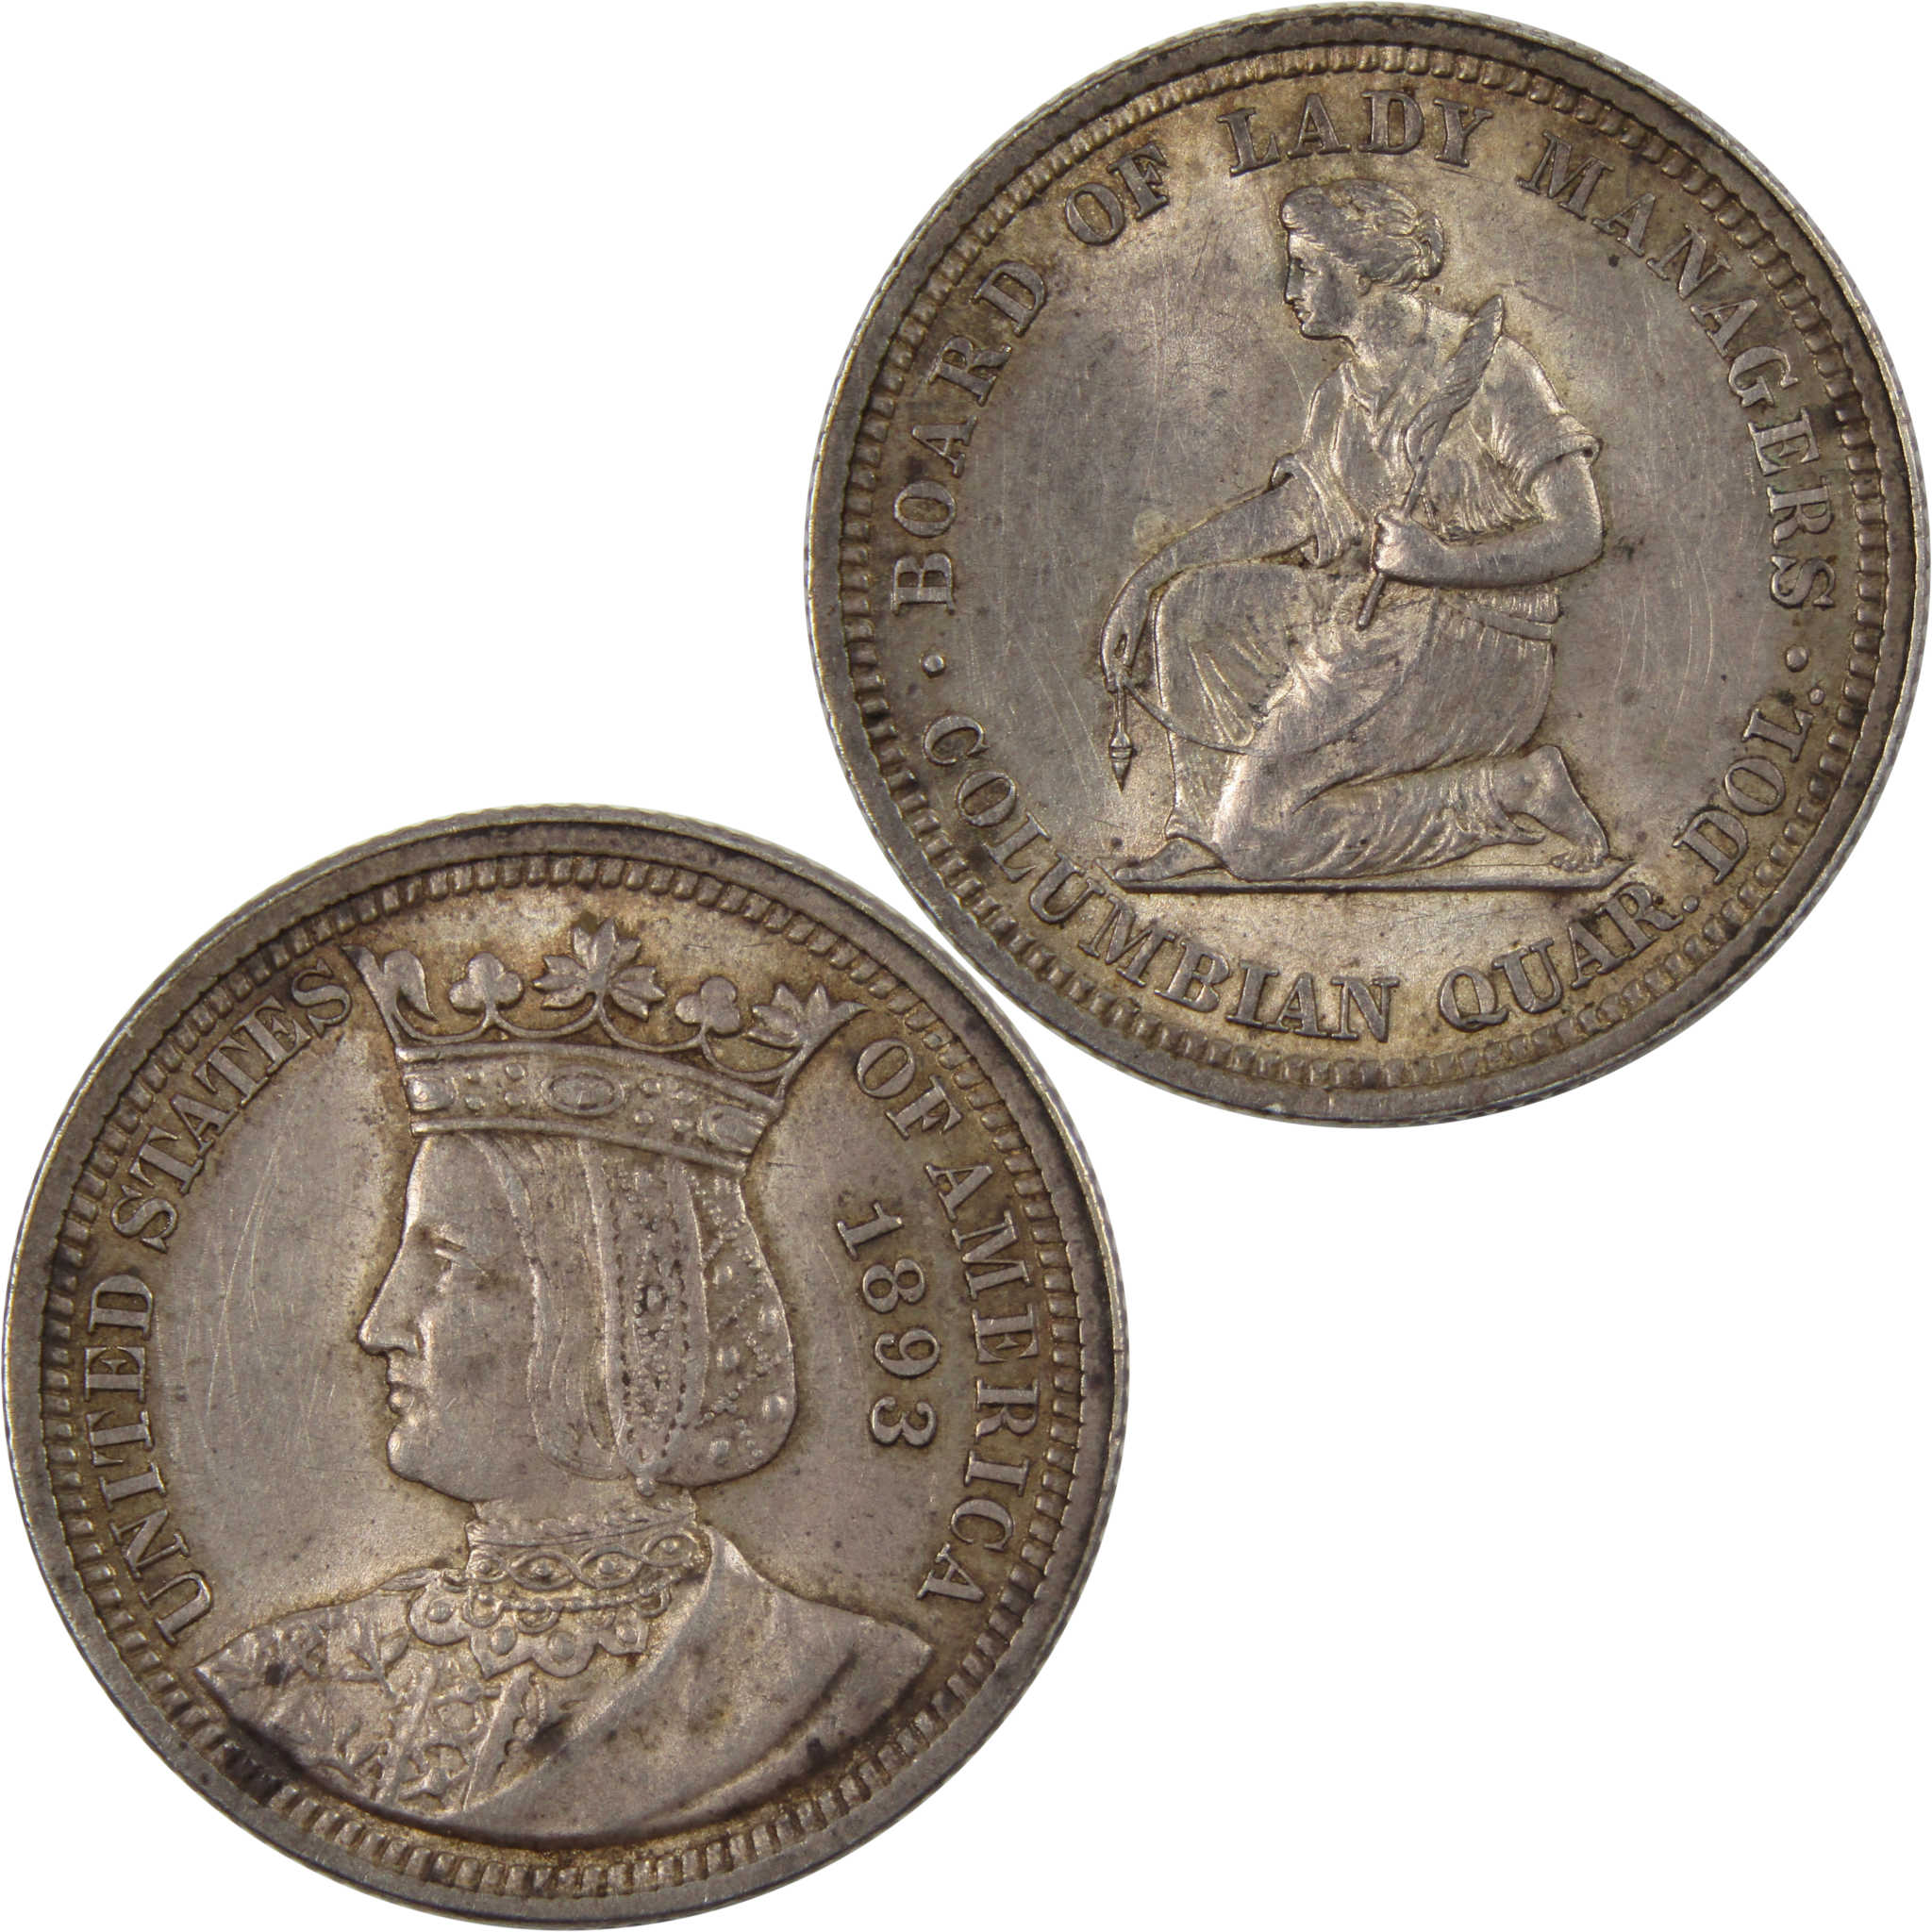 World's Columbian Isabella Commemorative Quarter 1893 AU SKU:I7390